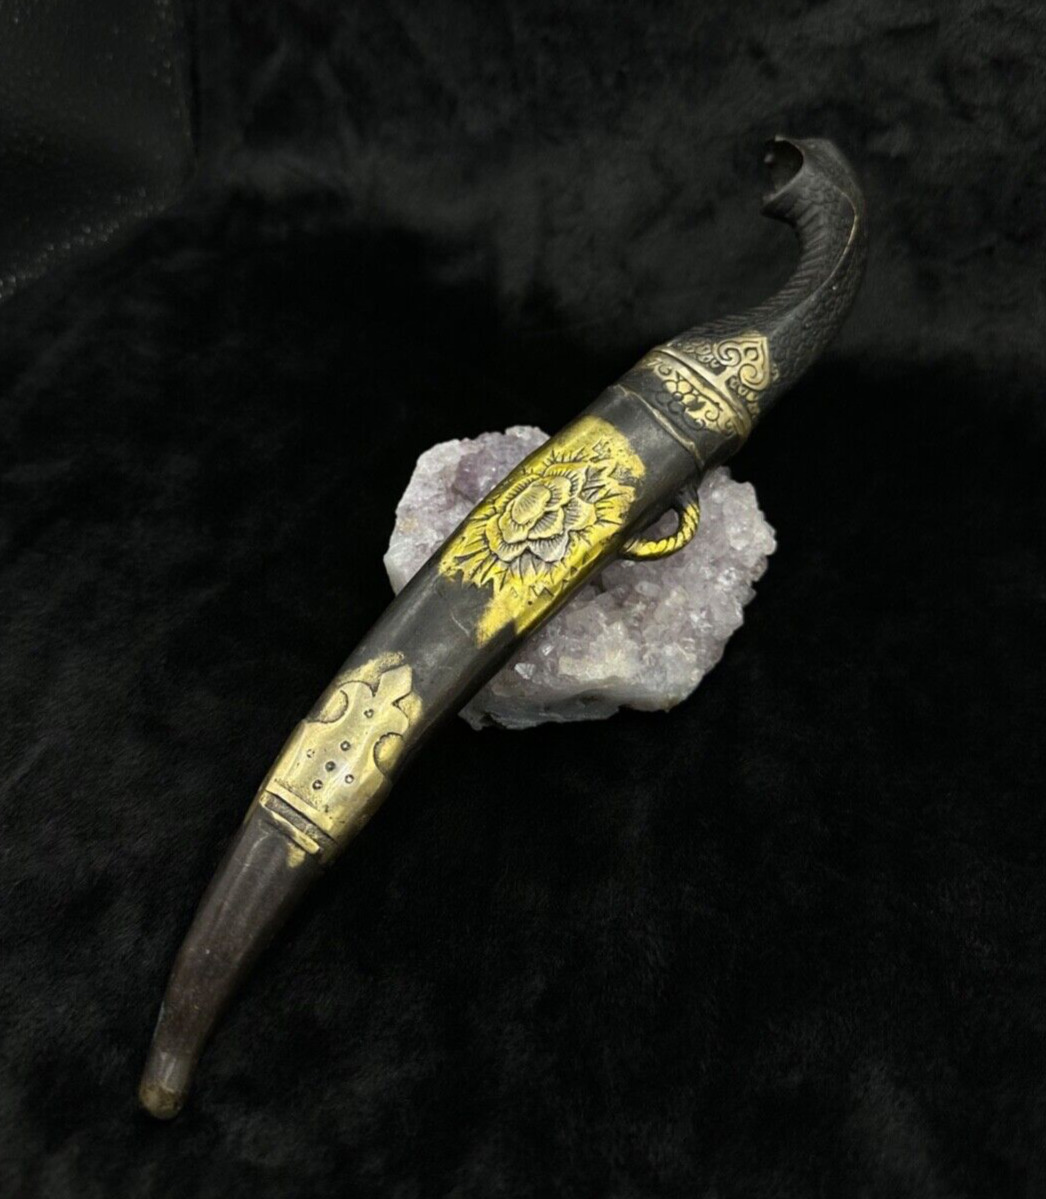 Wonderful Art Unique Mugal Design Old Bronze Dagger Knife With Snake Head